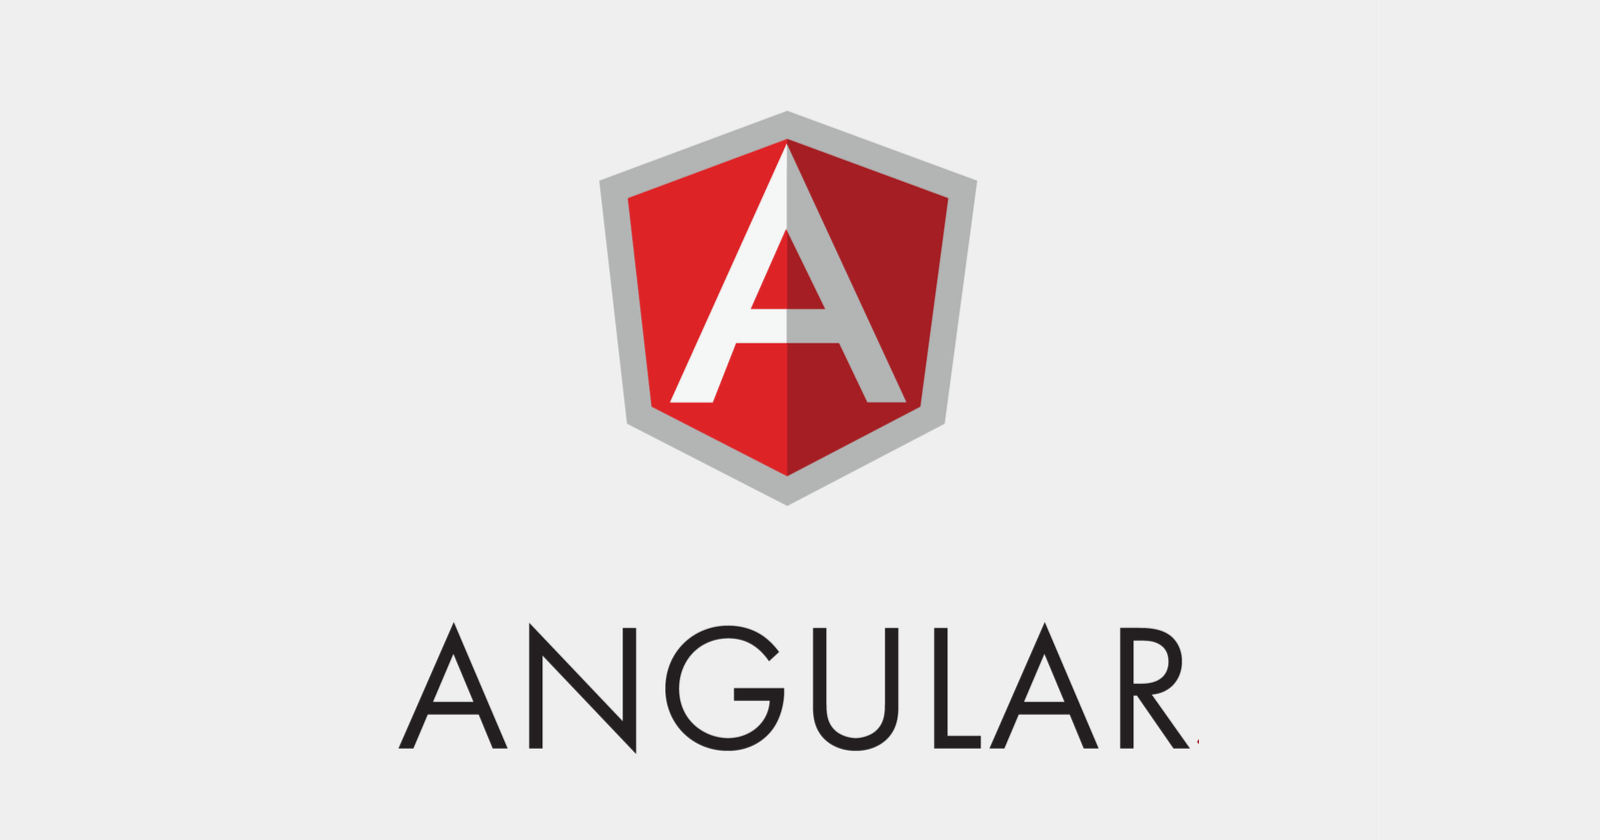 Angular web development framework